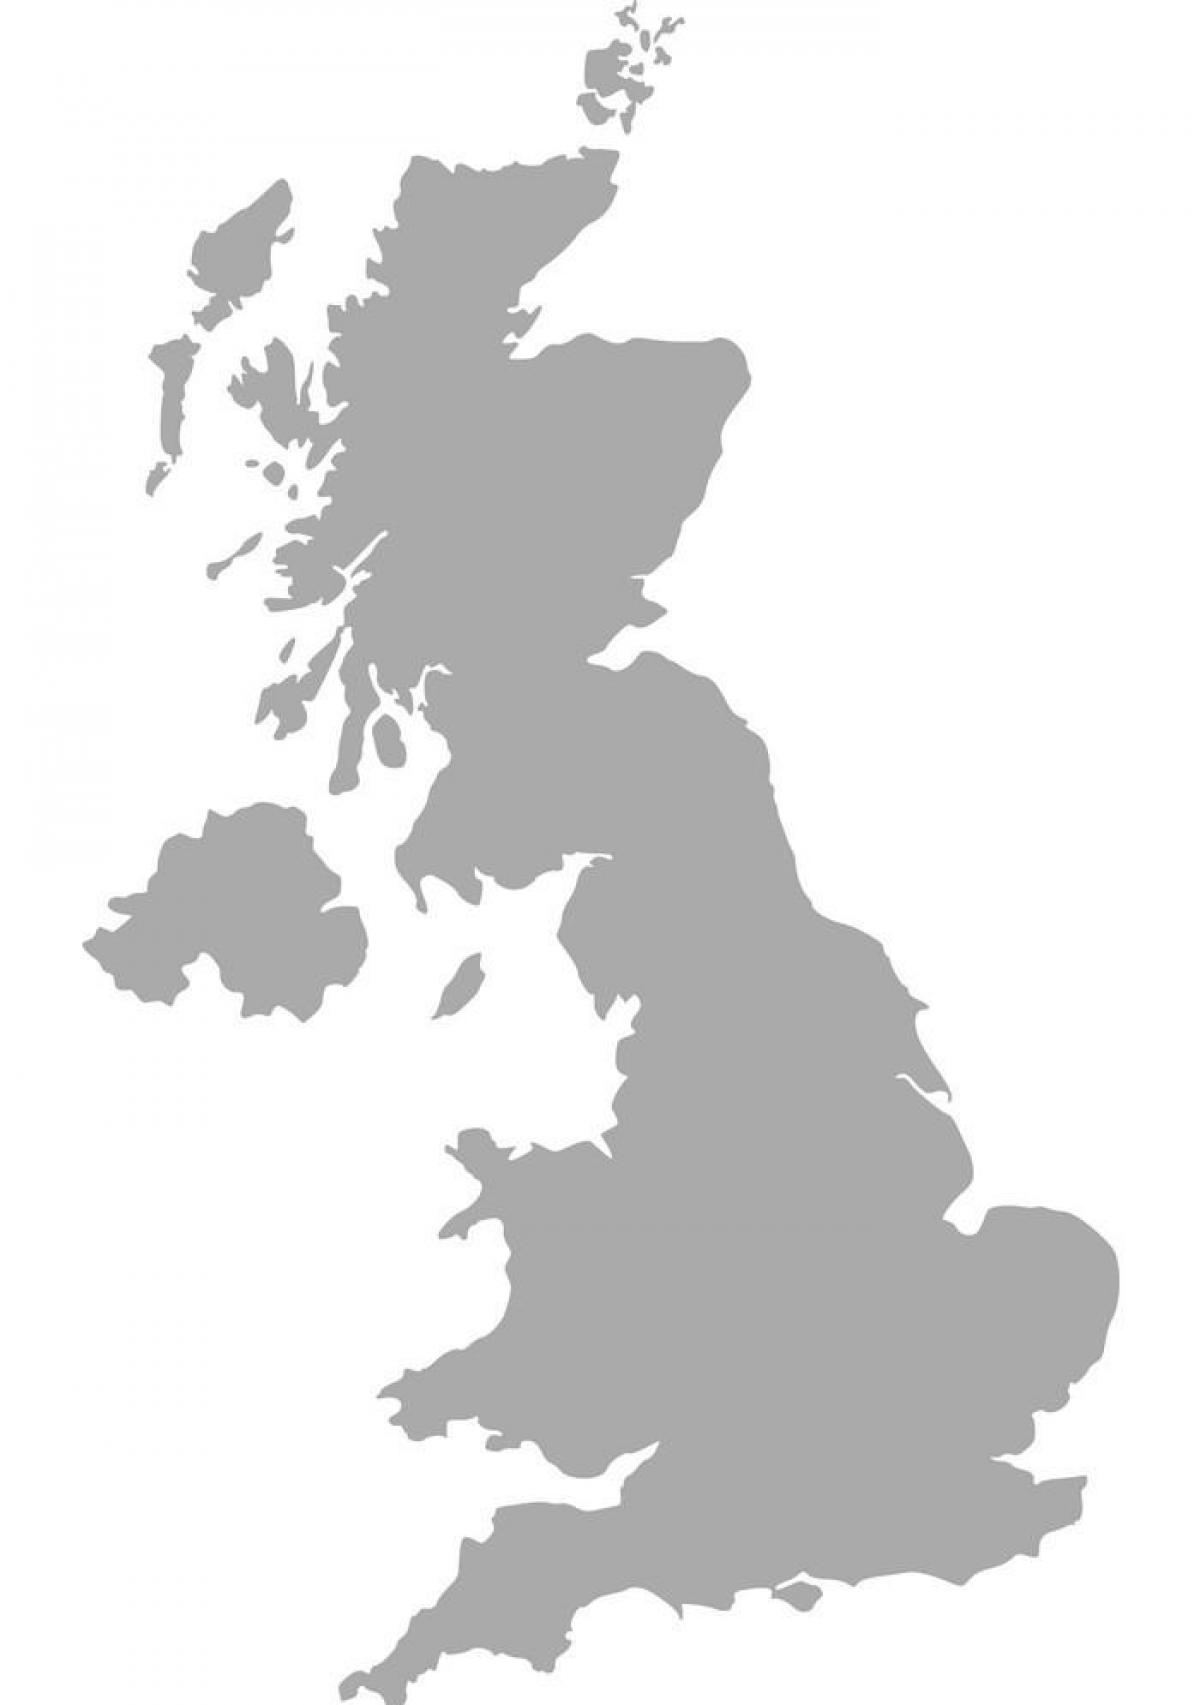 Mapa vetorial do Reino Unido (UK)